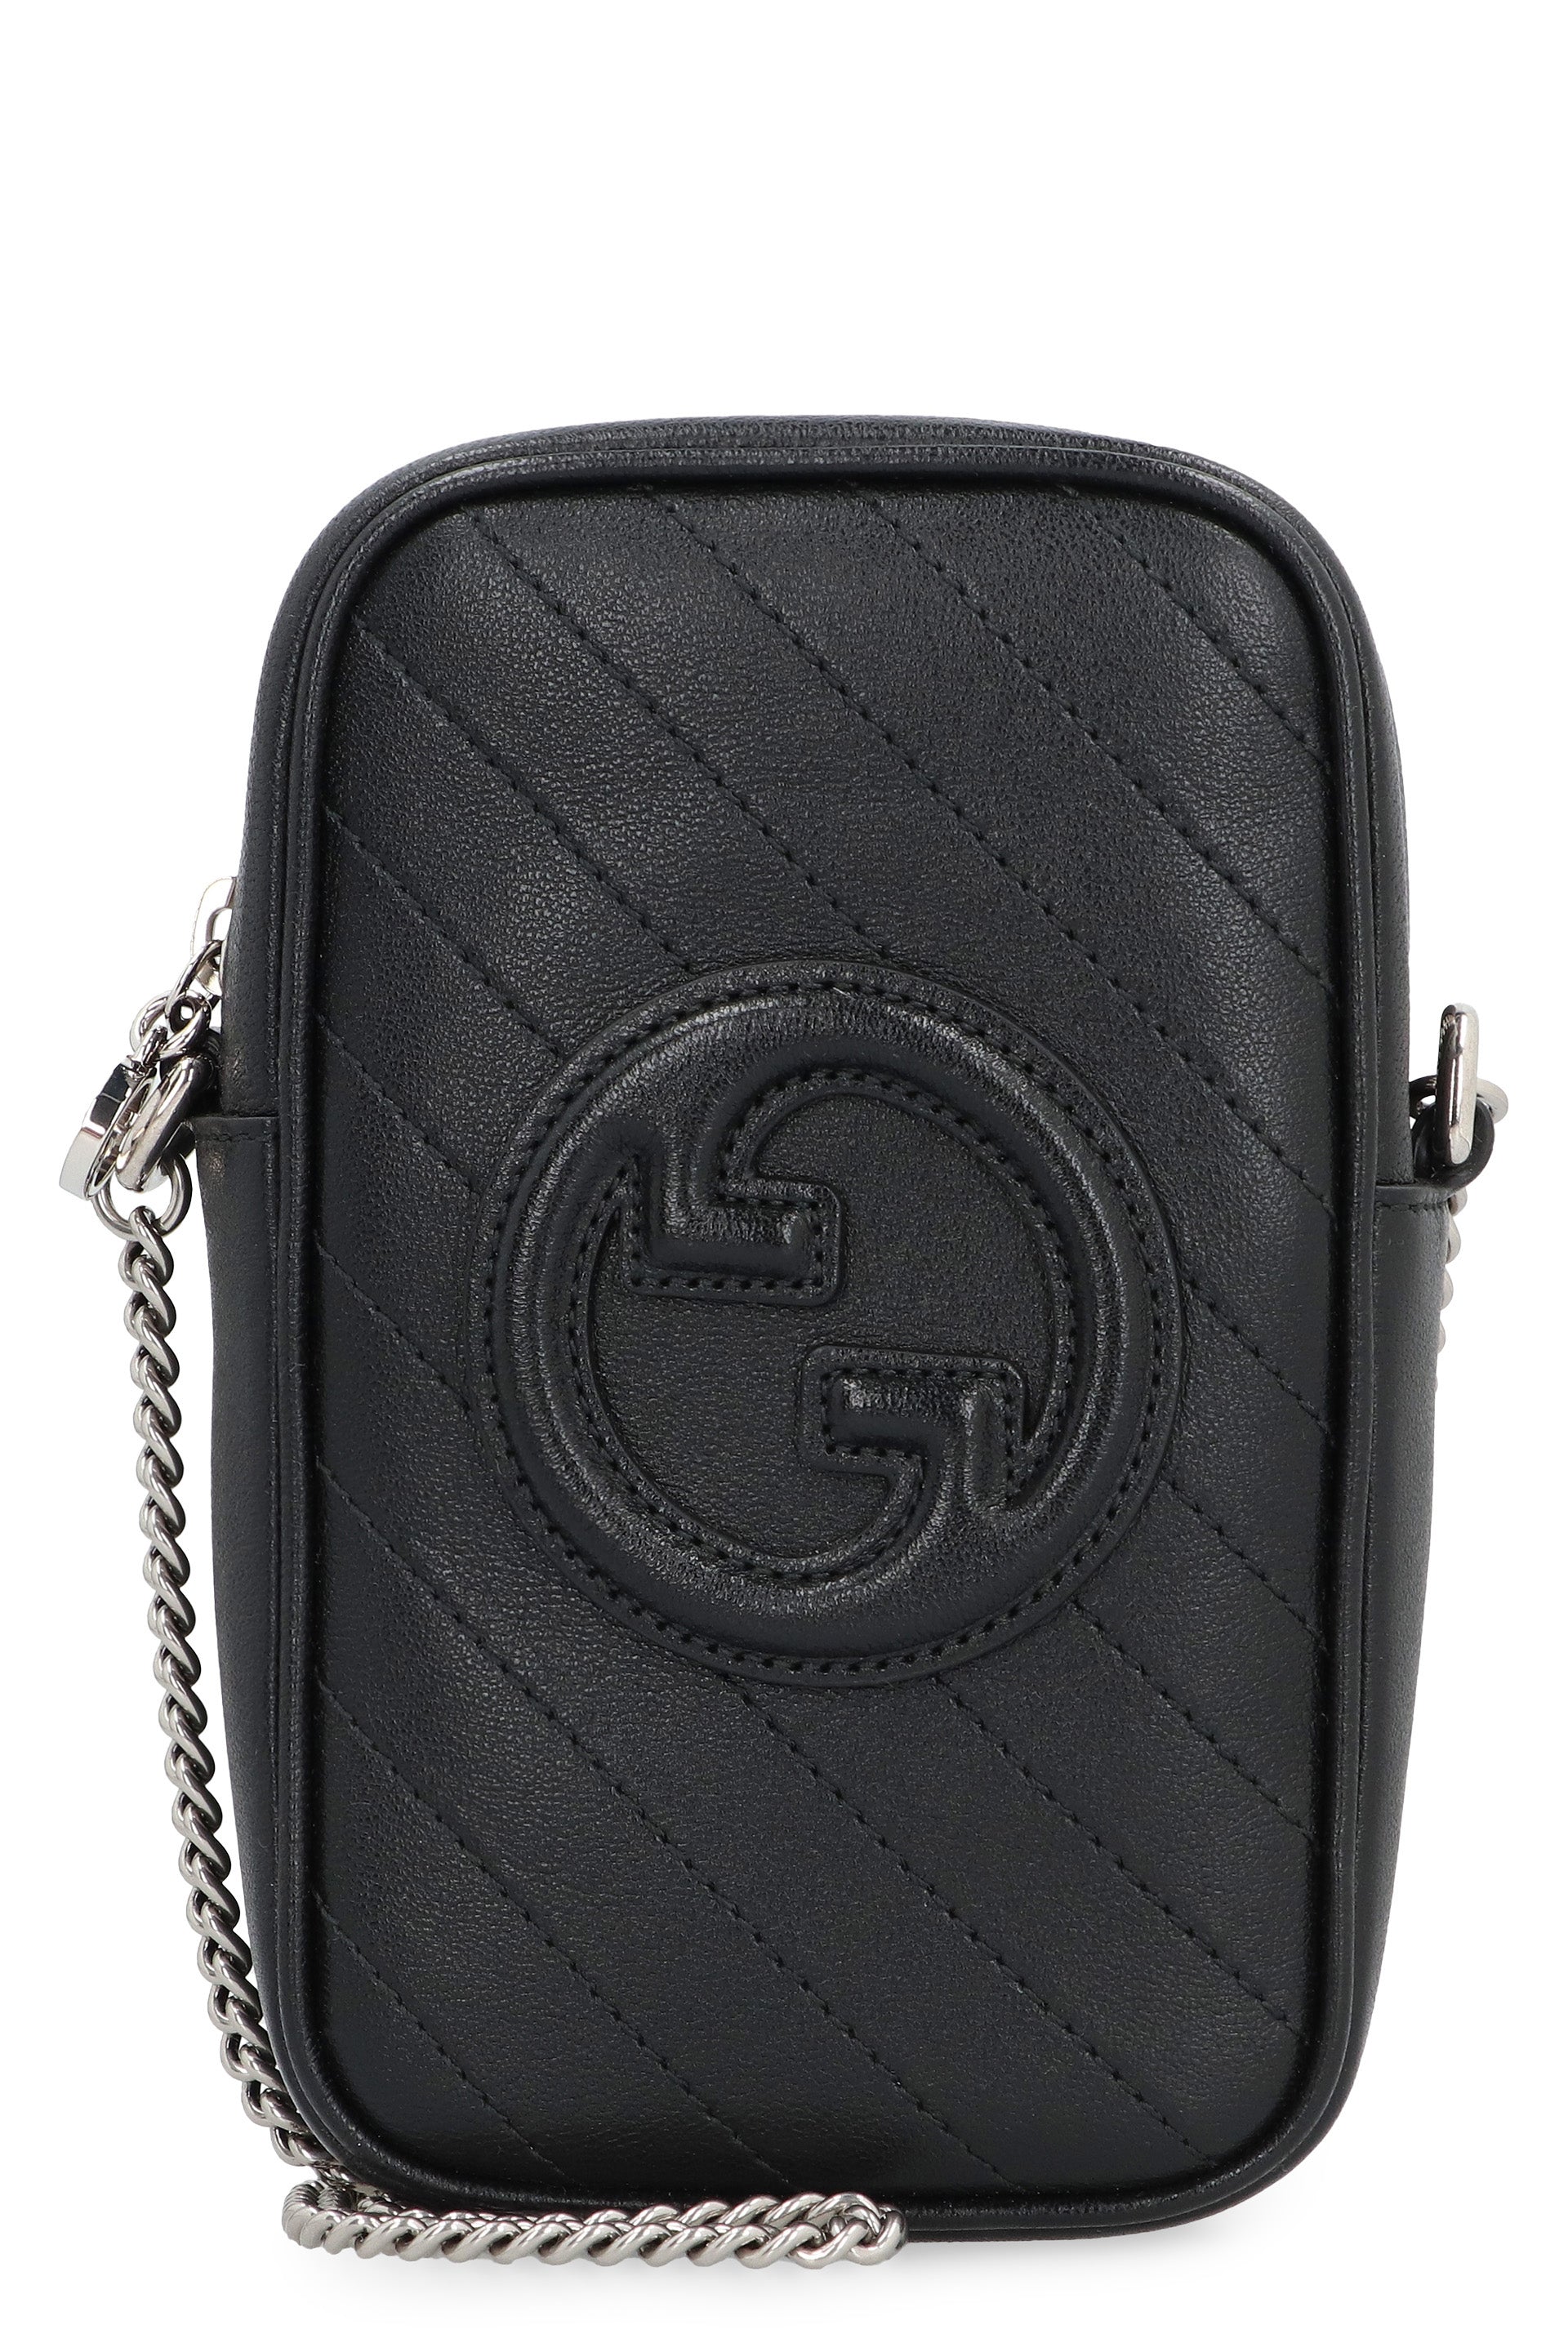 Shop Gucci Black Leather Mini Crossbody Bag With Chain Shoulder Strap